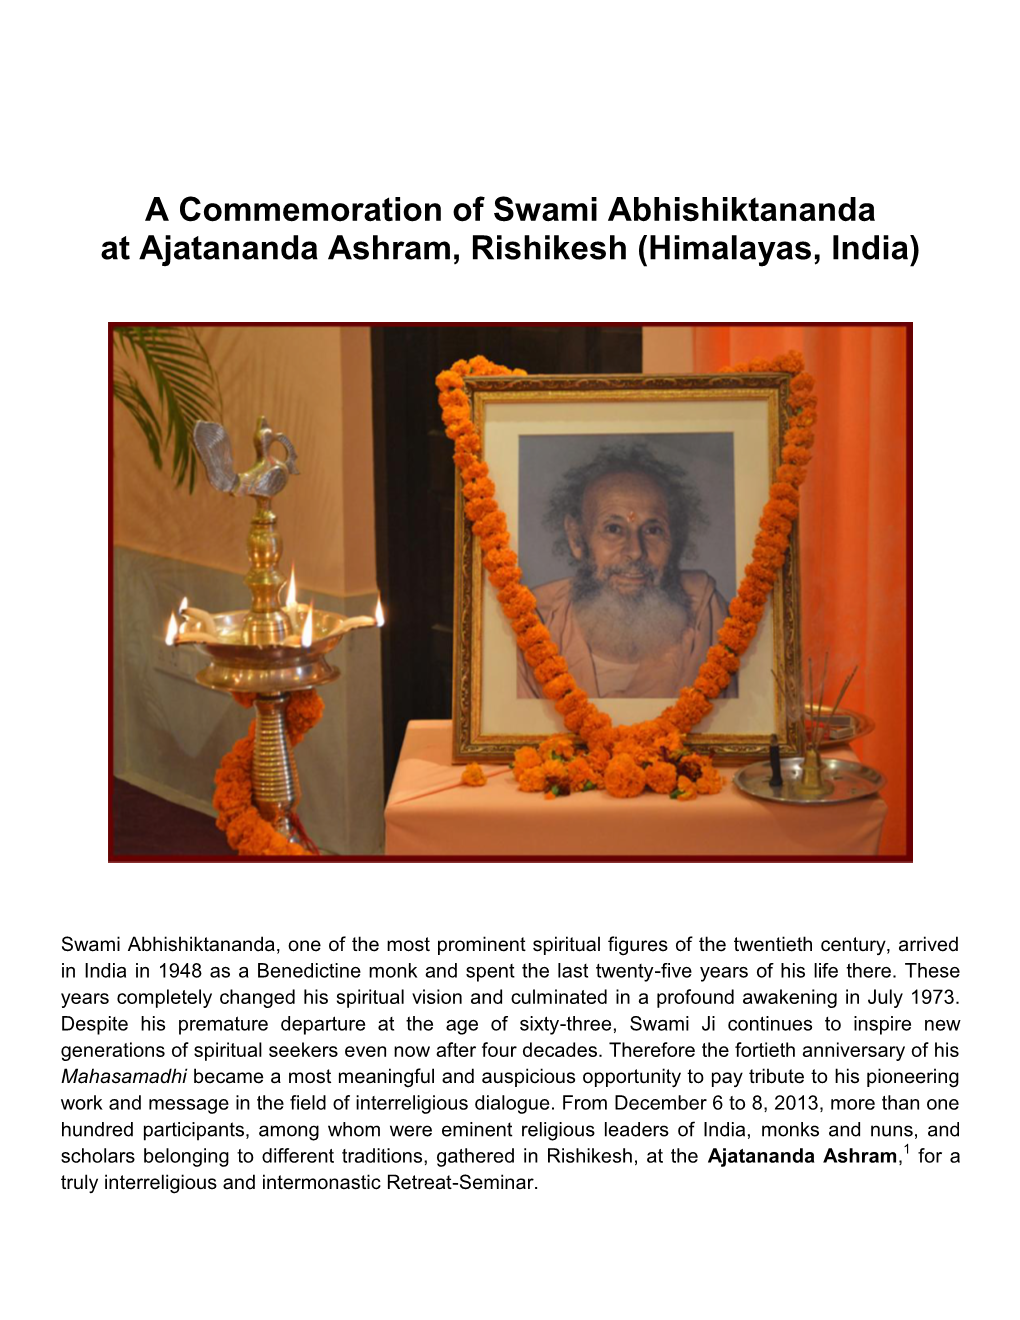 A Commemoration of Swami Abhishiktananda at Ajatananda Ashram, Rishikesh (Himalayas, India)